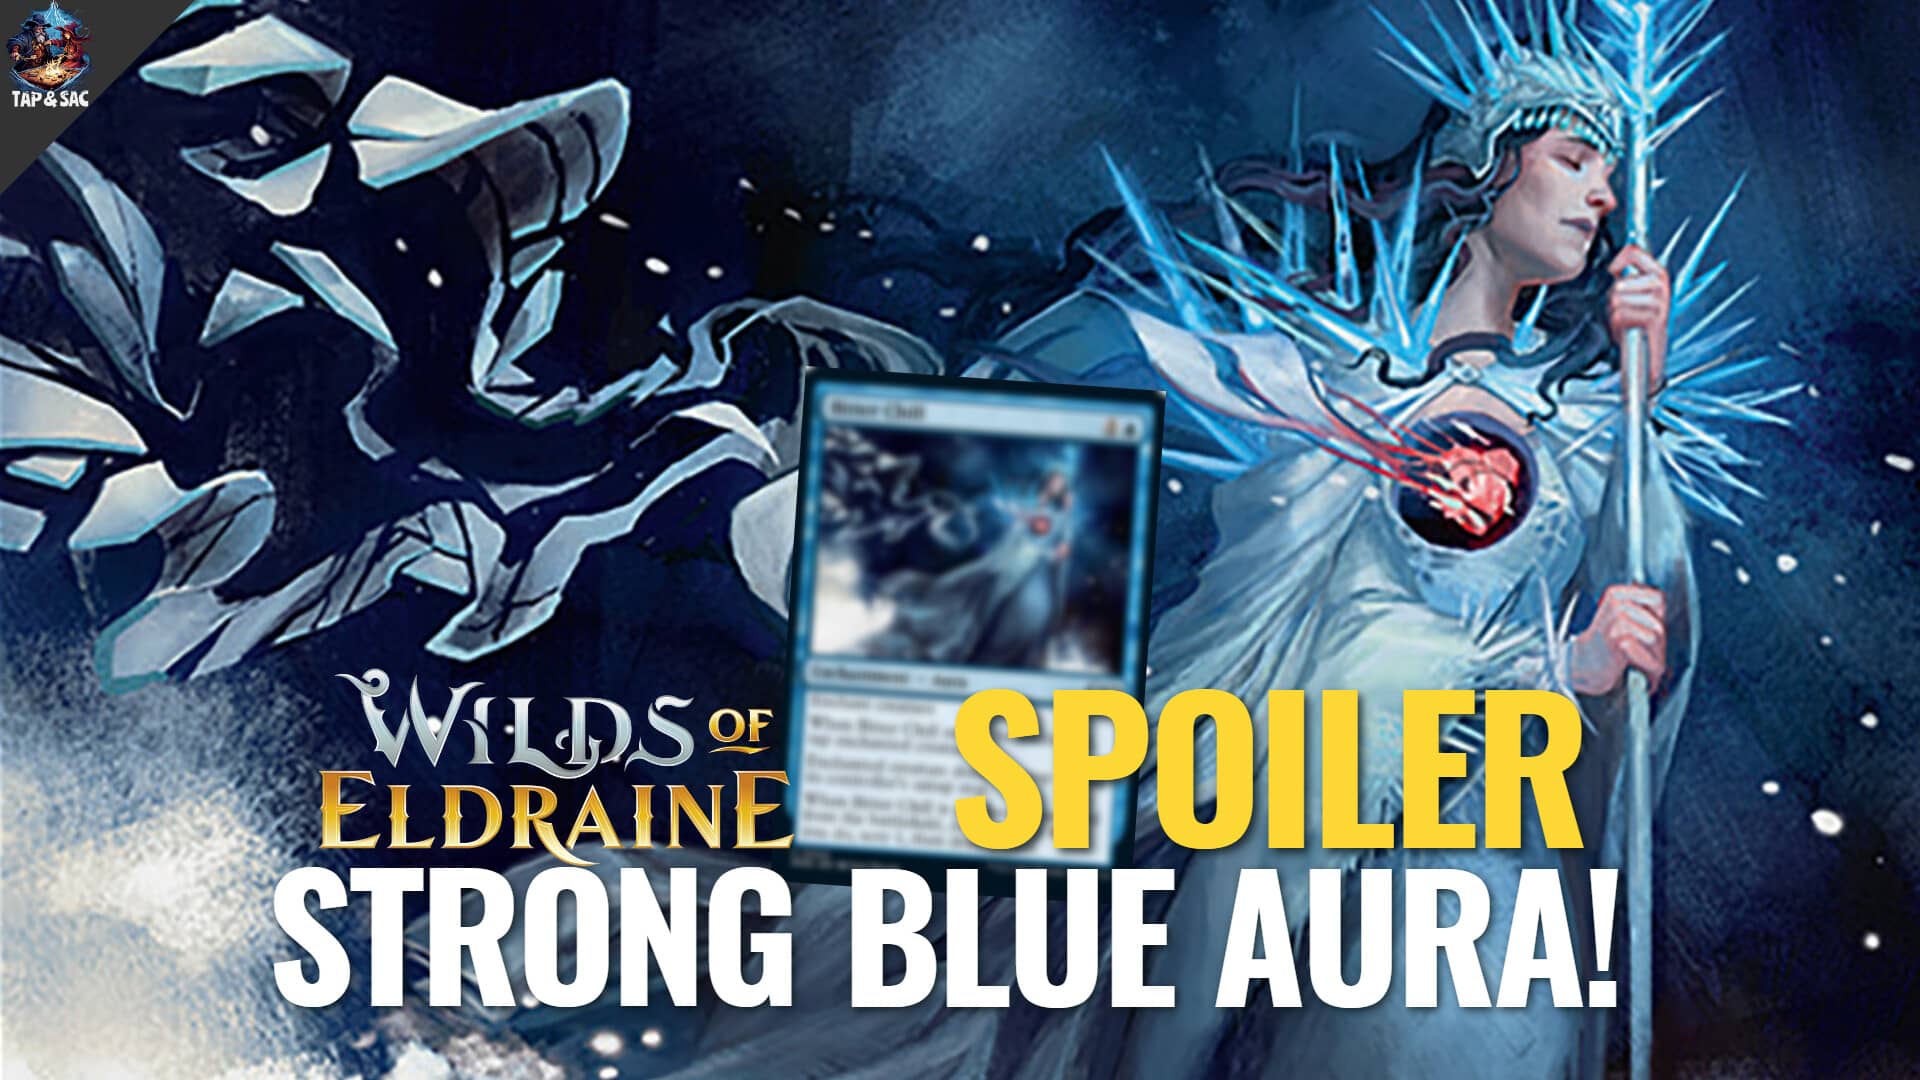 This Wilds of Eldraine Spoiler is the Best Blue Lockdown Aura Ever Created in MTG